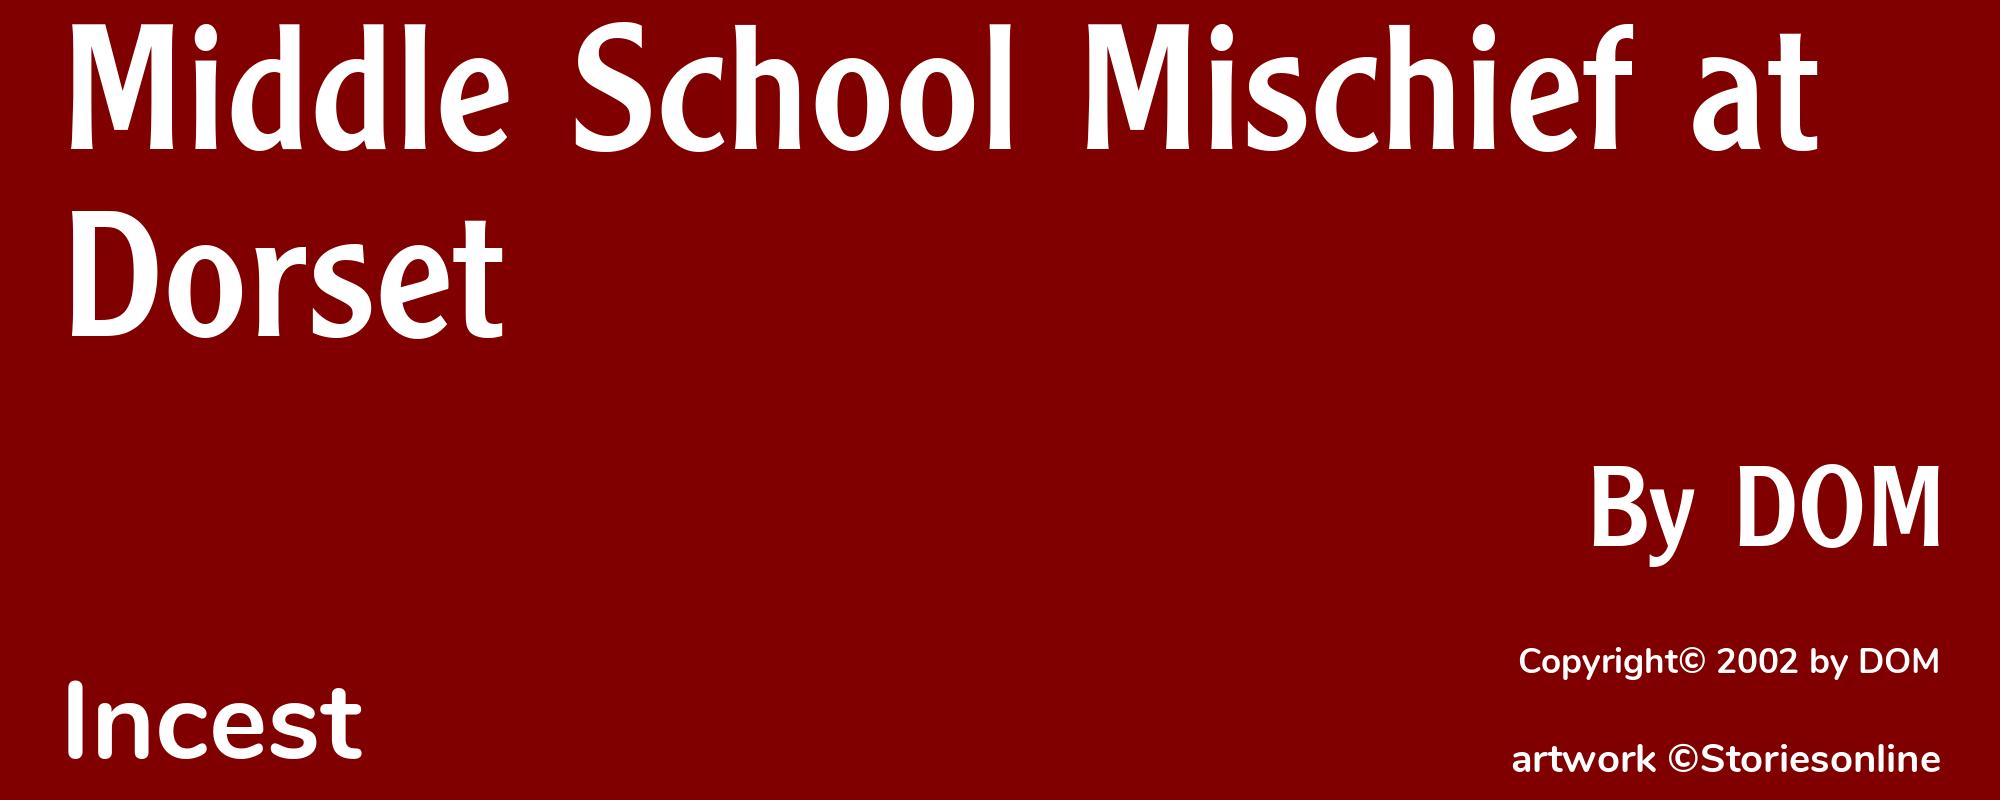 Middle School Mischief at Dorset - Cover